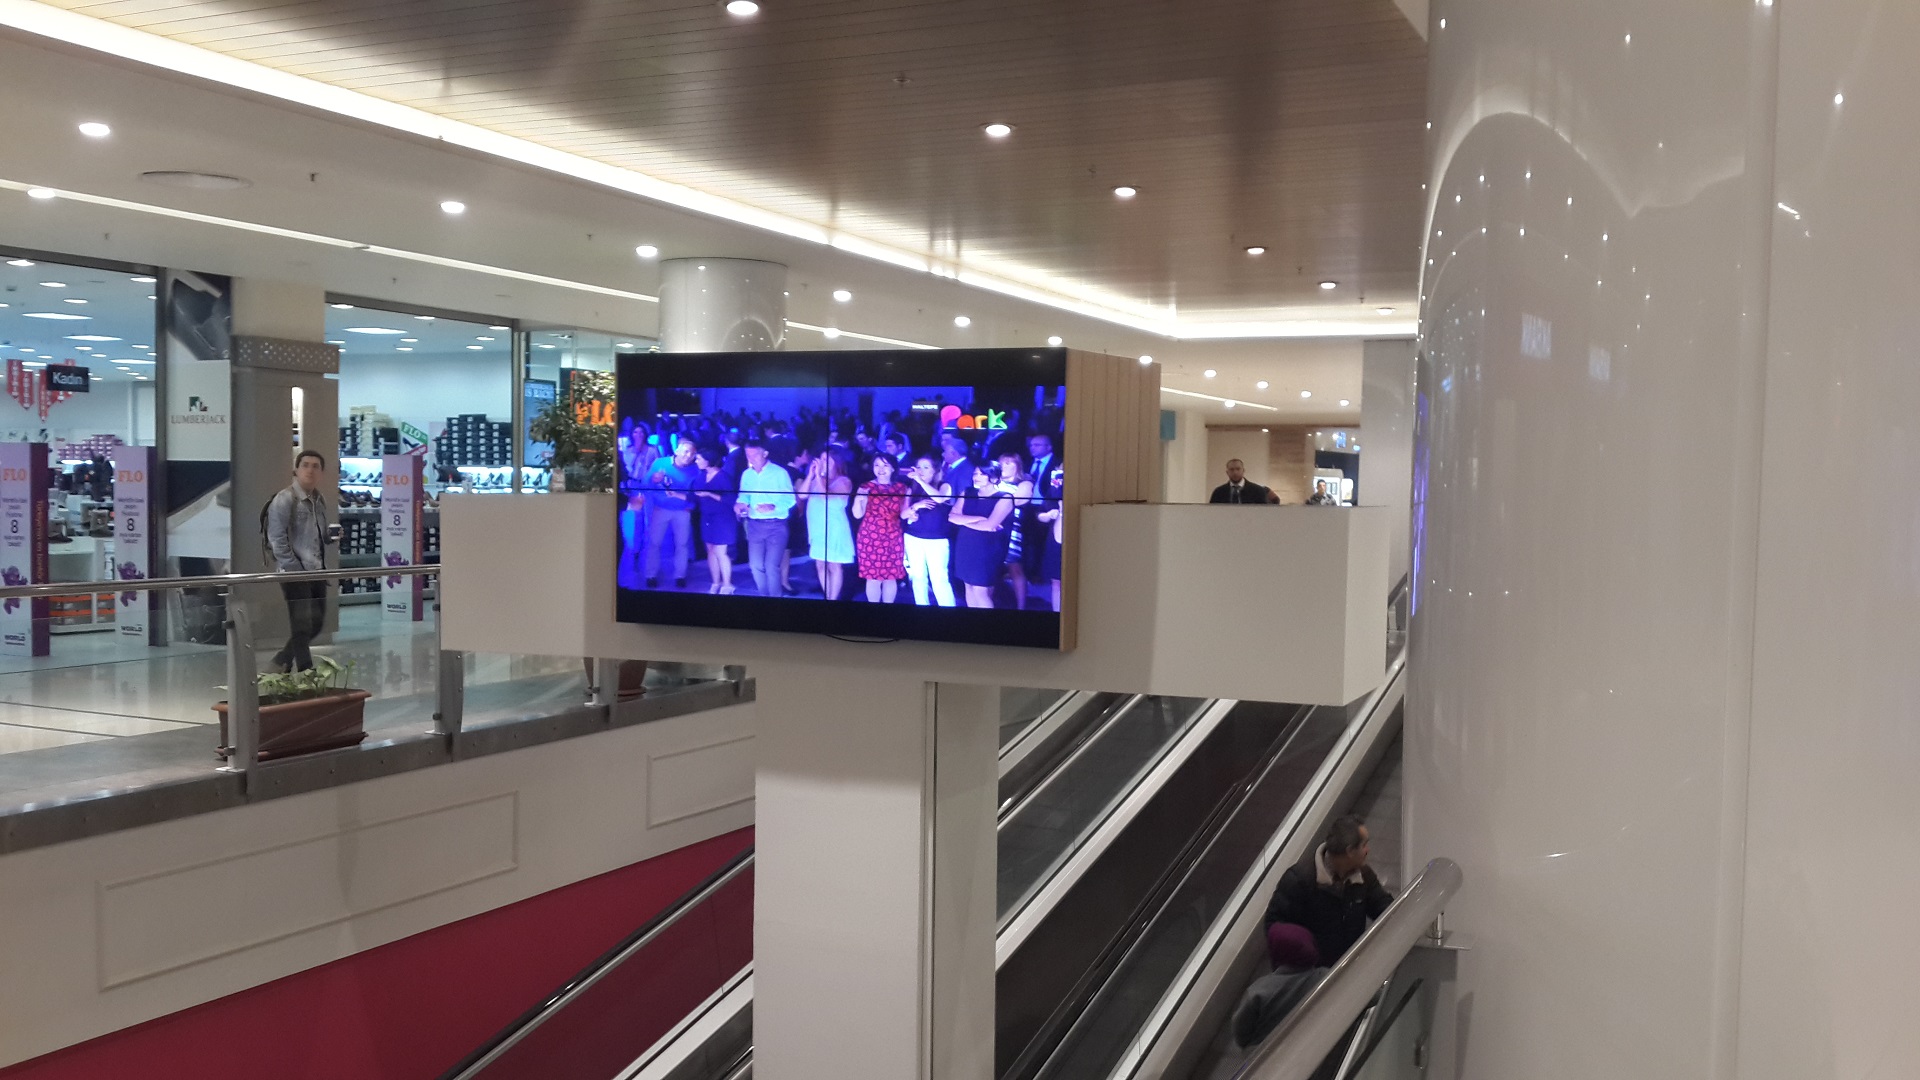 Maltepe Park Shopping Center Videowall Project